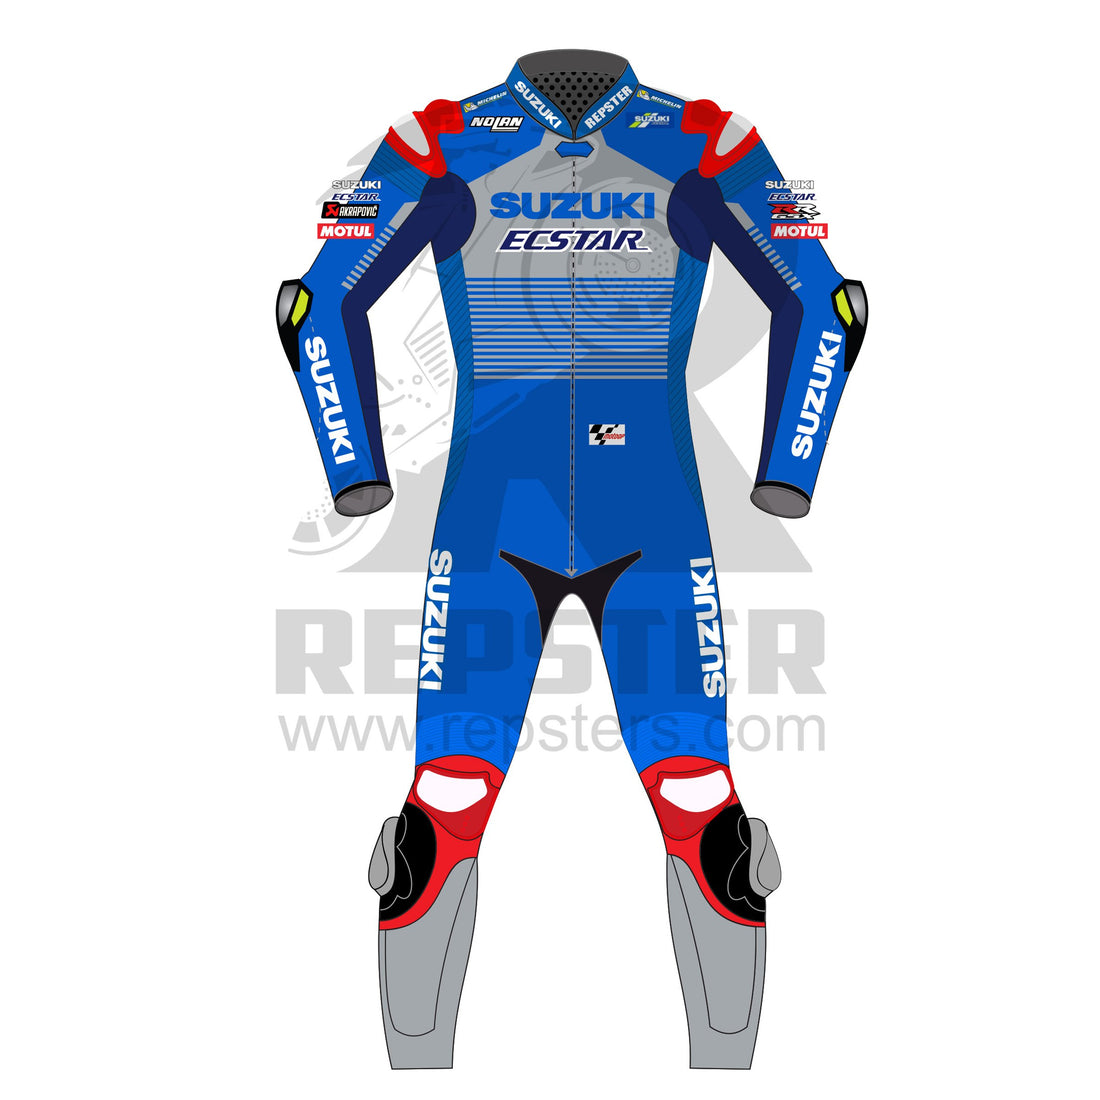 Suzuki Ecstar Álex Rins Motorcycle Racing Leather Suit 2020